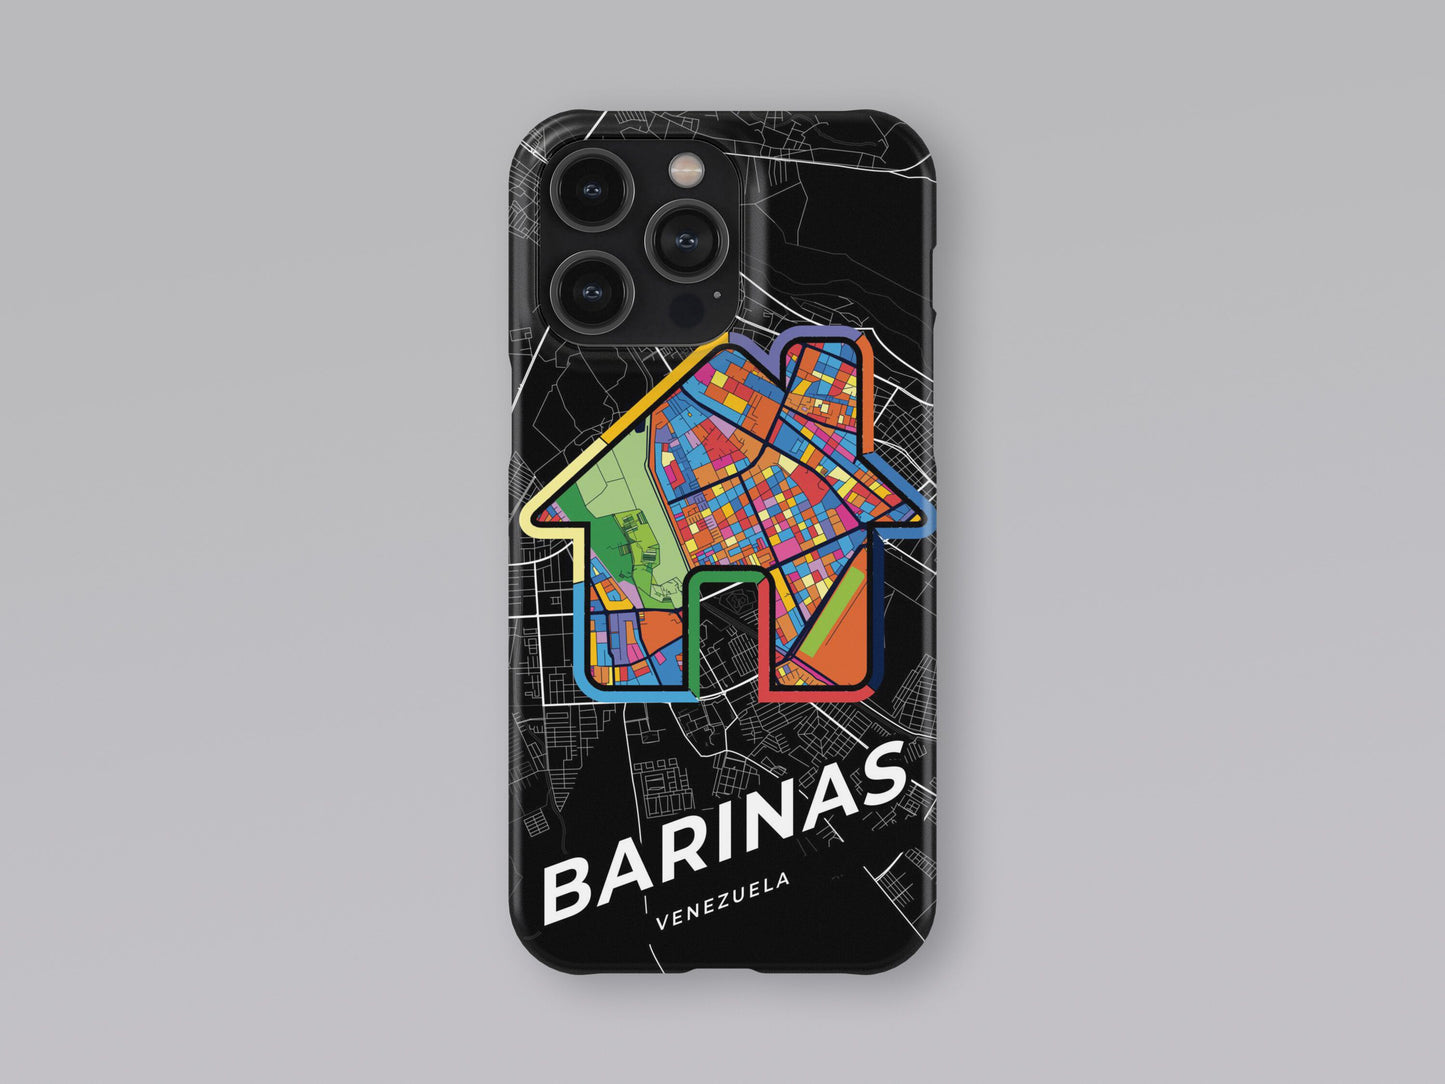 Barinas Venezuela slim phone case with colorful icon. Birthday, wedding or housewarming gift. Couple match cases. 3